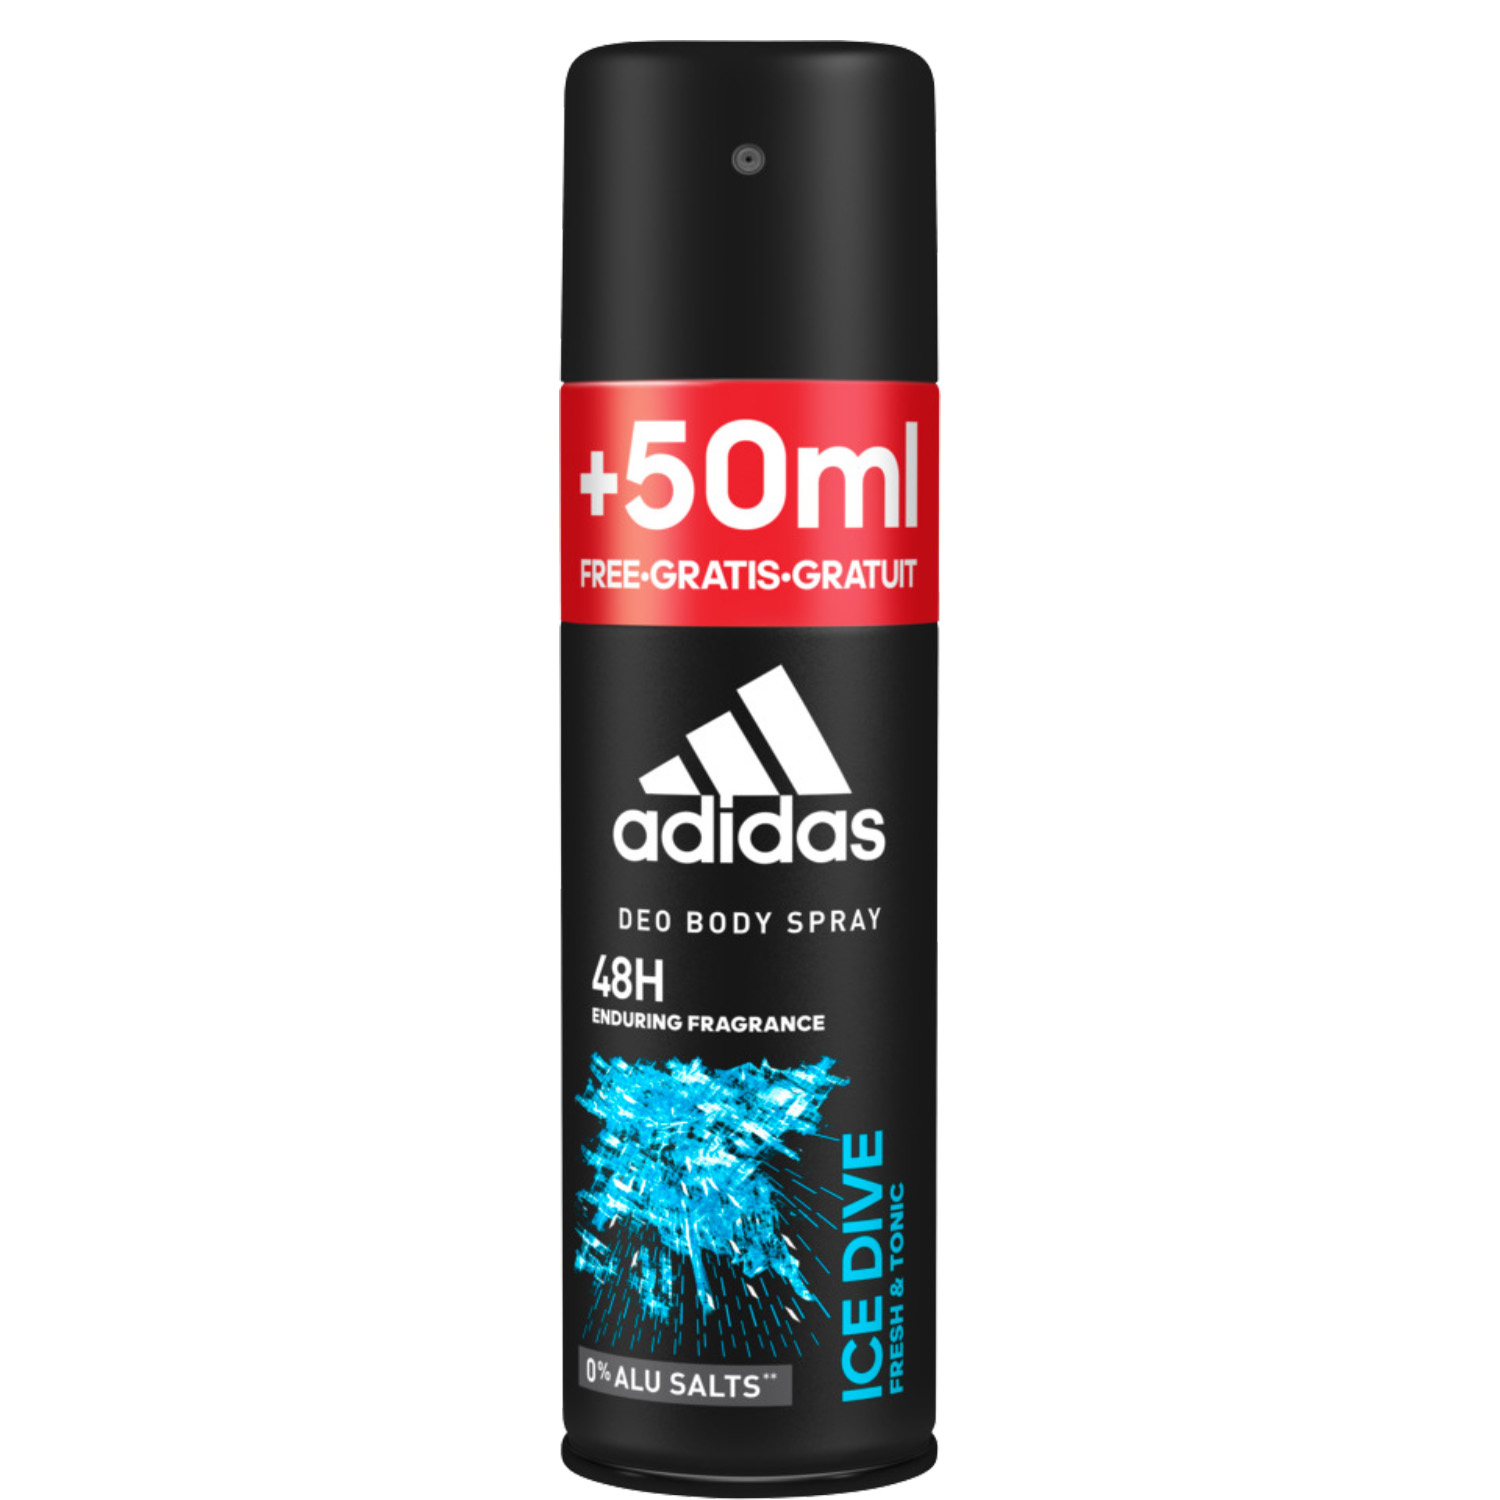 Adidas Ice Dive Deodorant Body Spray 150ml + 50ml GRATIS